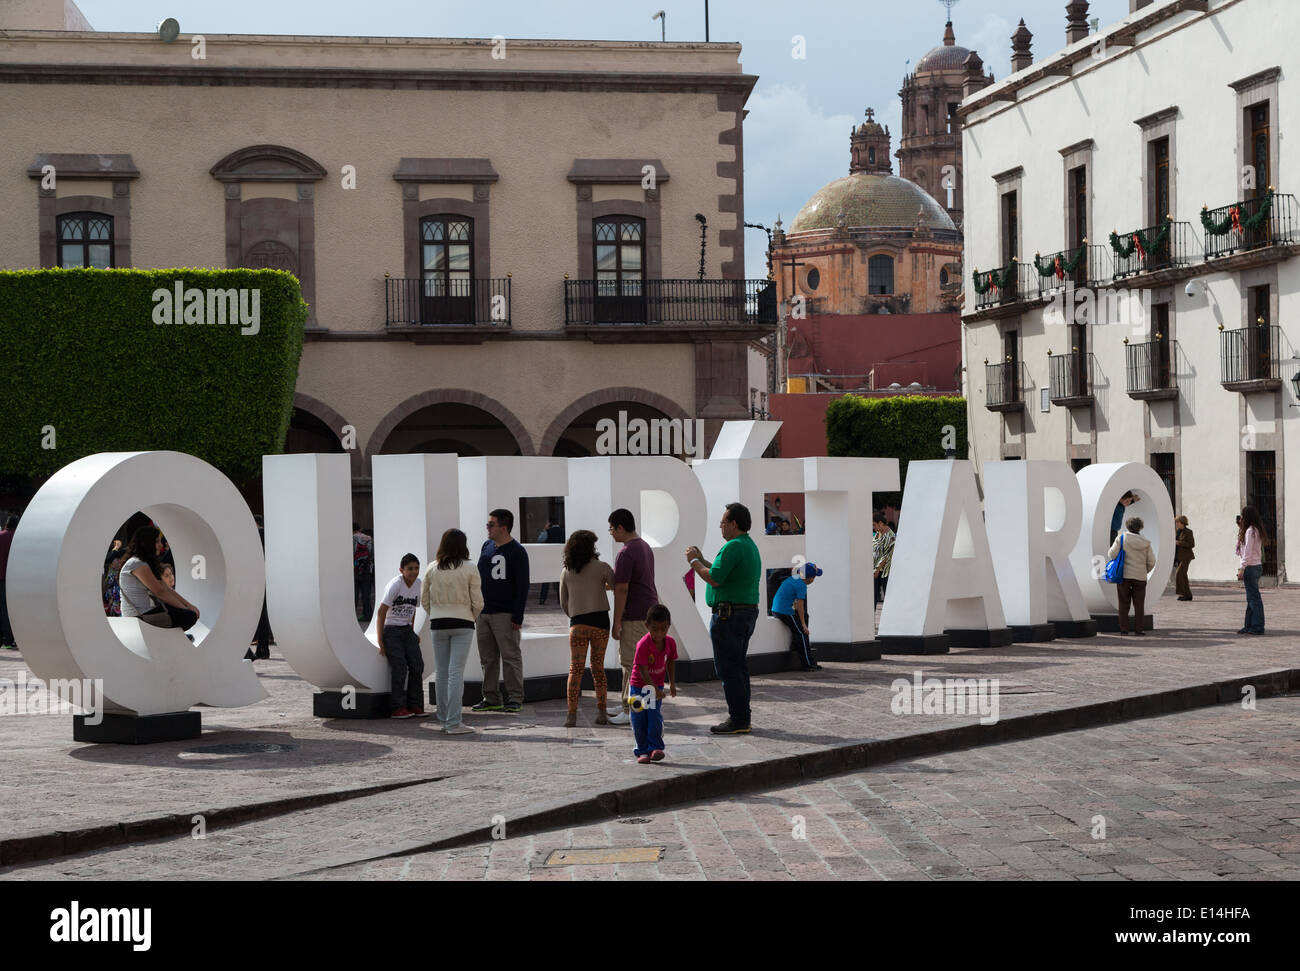 Giant letters spelling Queretaro in a plaza in central Queretaro Mexico Stock Photo